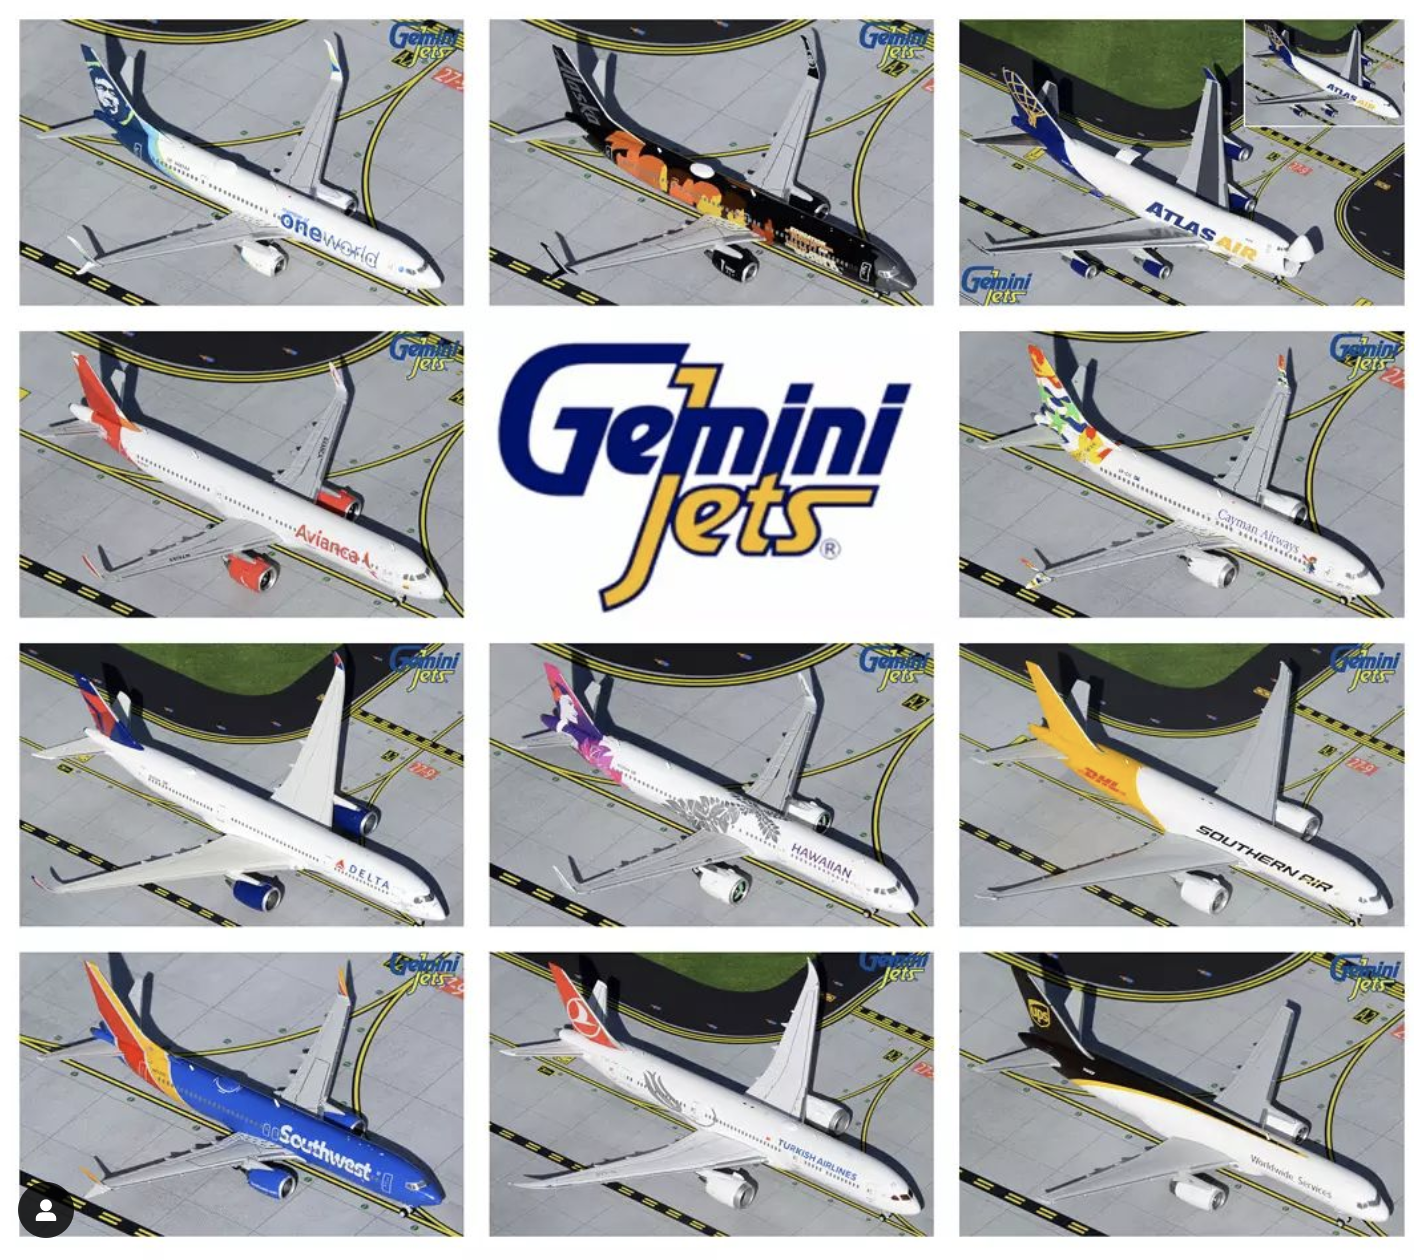 GeminiJets Airplane Models - September 2021 New Release + Discounts